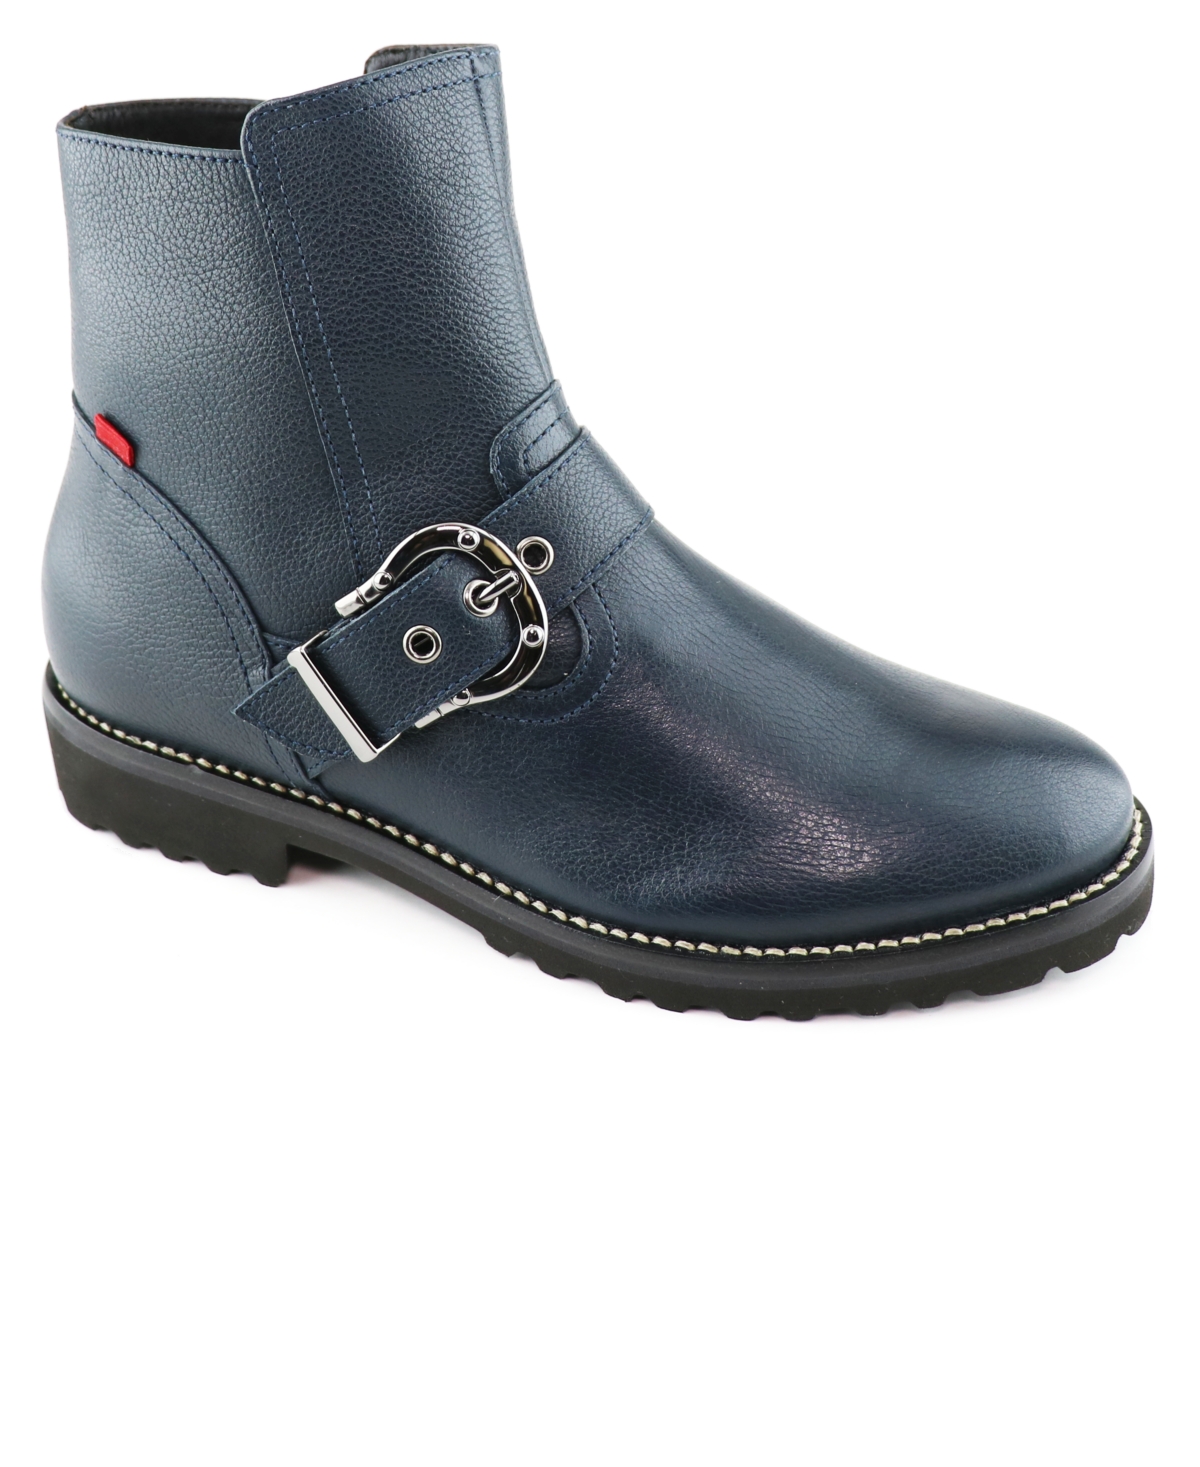 Women's Gem Street Leather Shoe Boots - Navy Mini Grainy